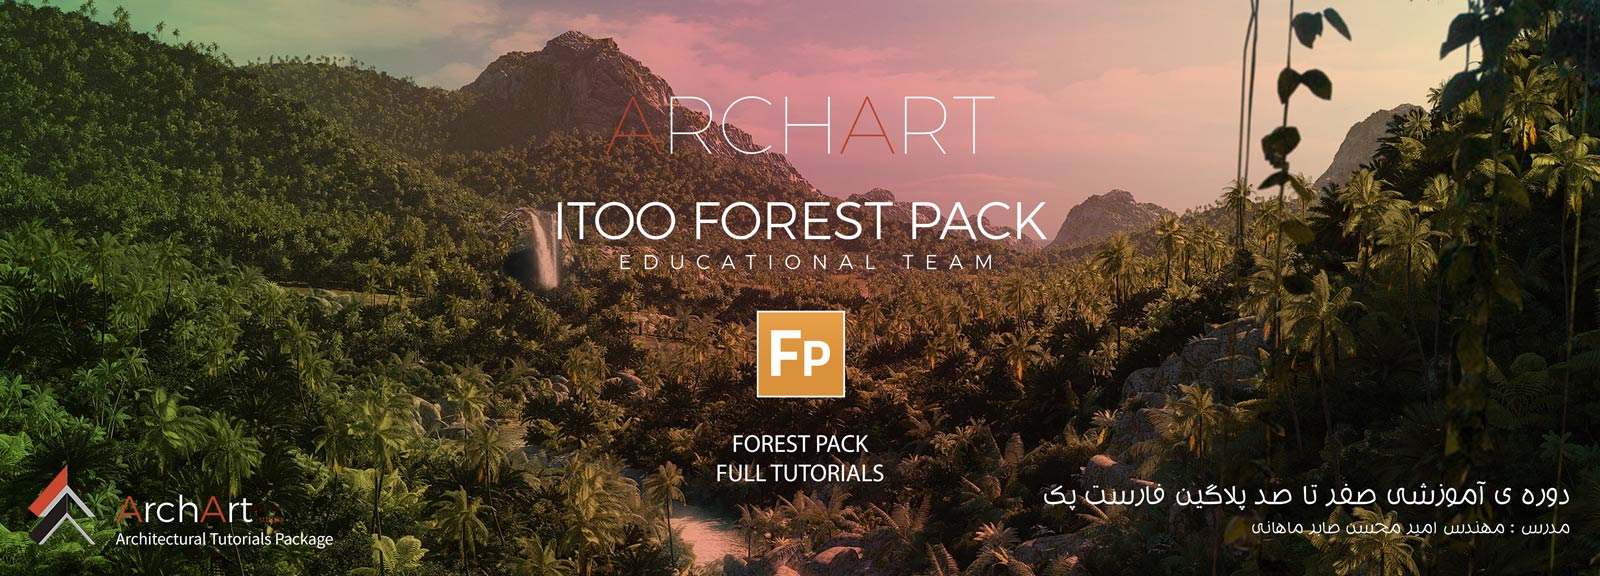 جلسه ی اول پلاگین فارست پک - Itoo Forest Pack